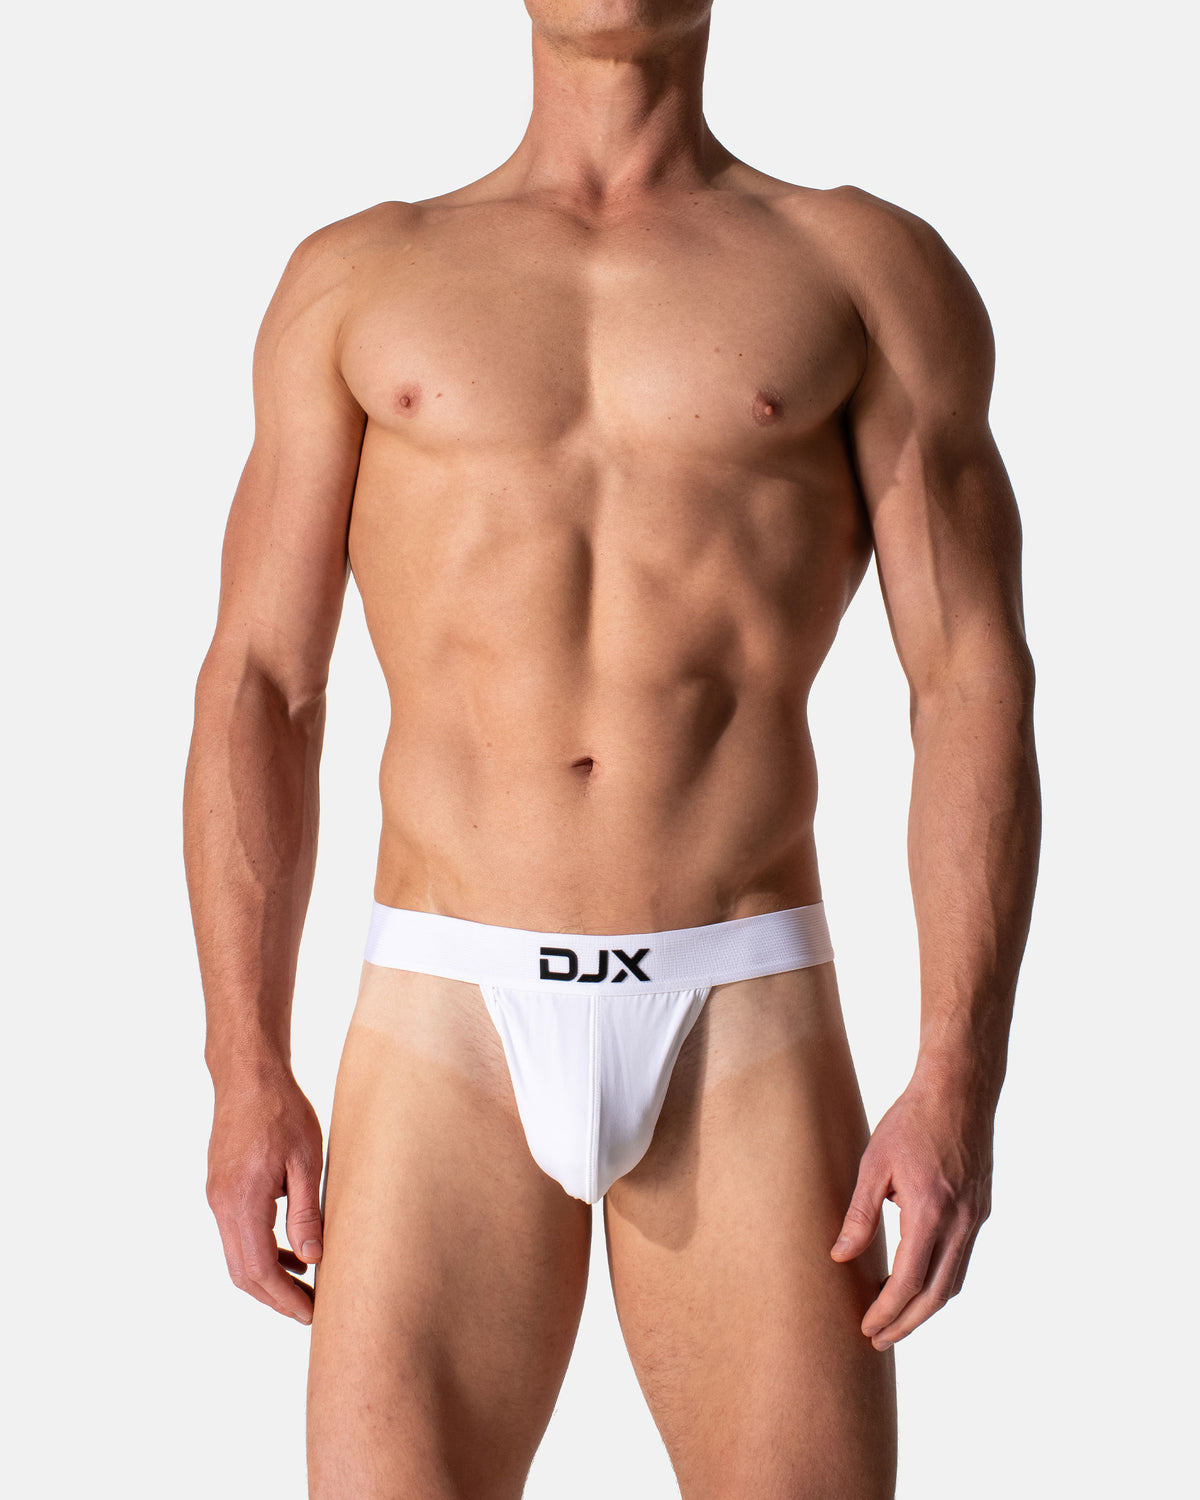 Buy Mens Jocks and Sexy Underwear Online in Australia - Daily Jocks